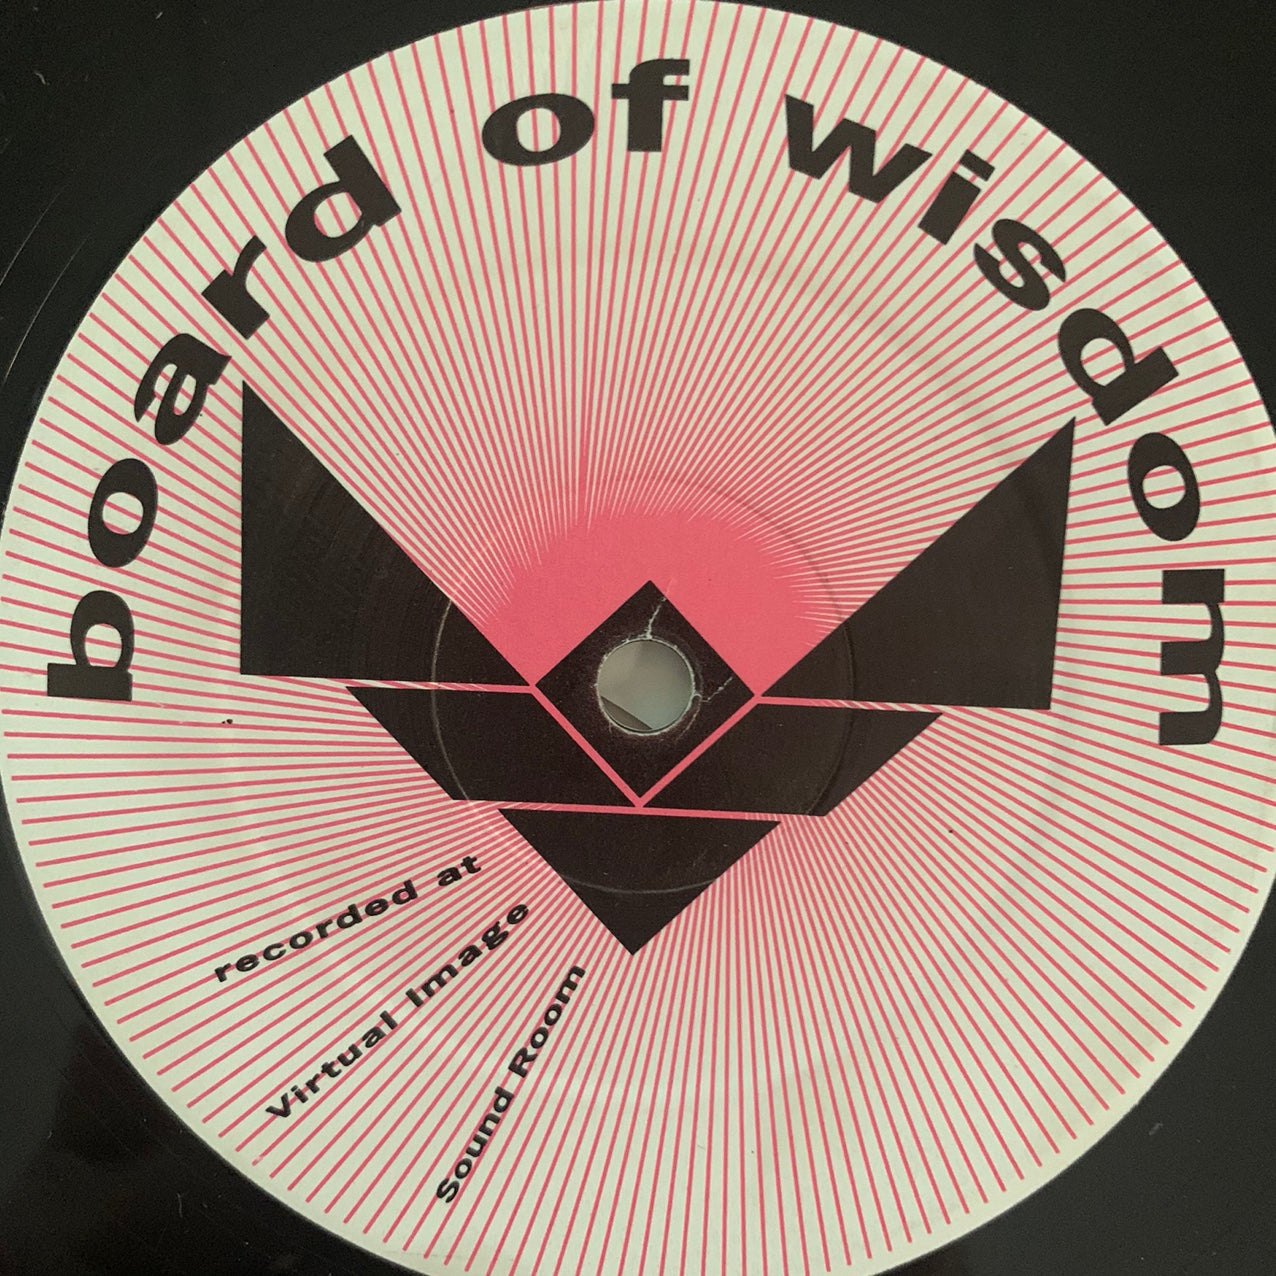 Board Of Wisdom “Over The Hill” Ep 4 Track 12inch Vinyl